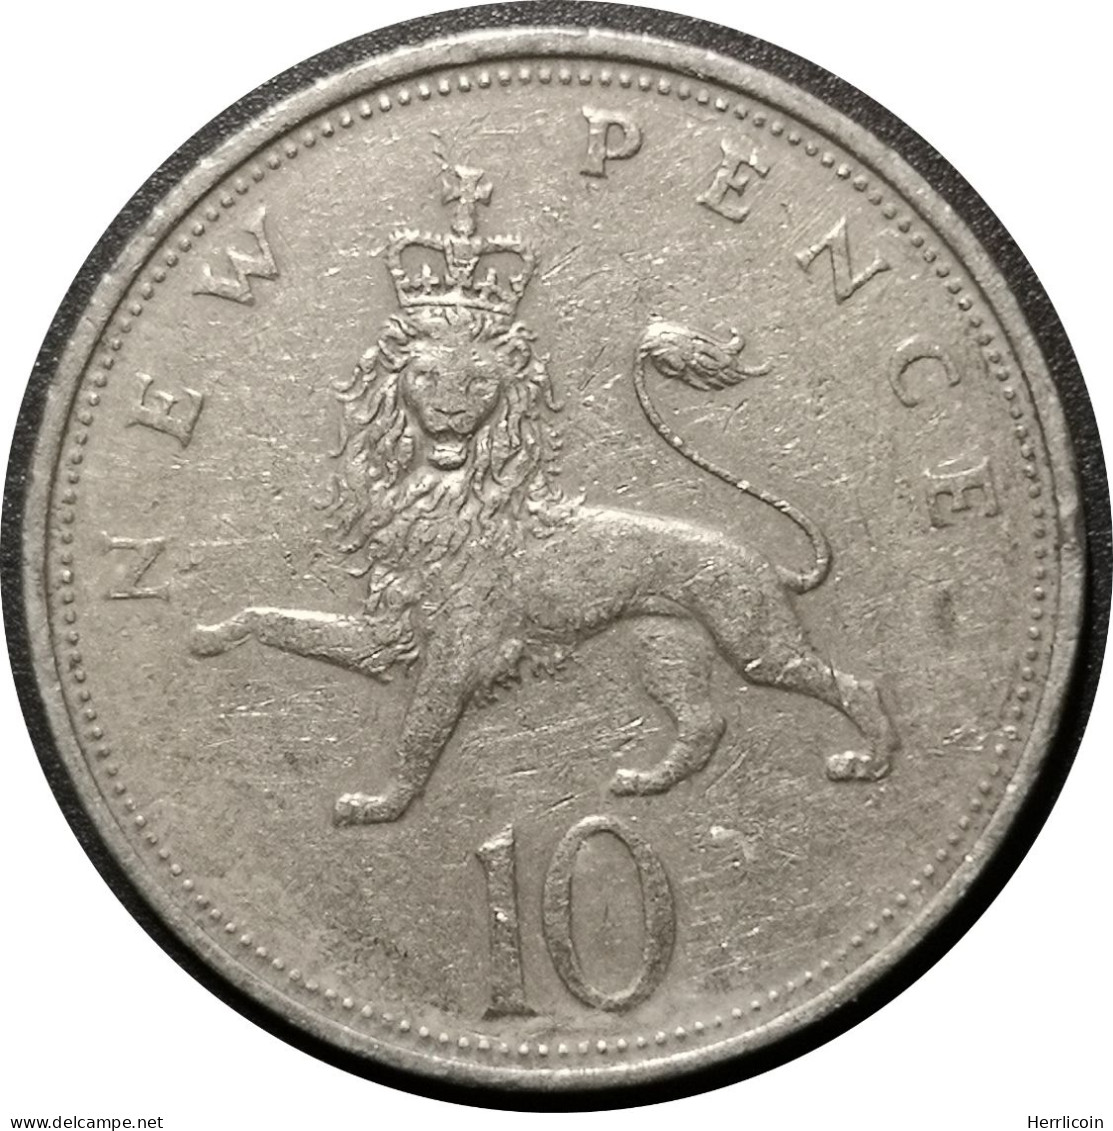 Monnaie Royaume Uni - 1969 - 10 New Pence Elizabeth II 2e Effigie - 10 Pence & 10 New Pence